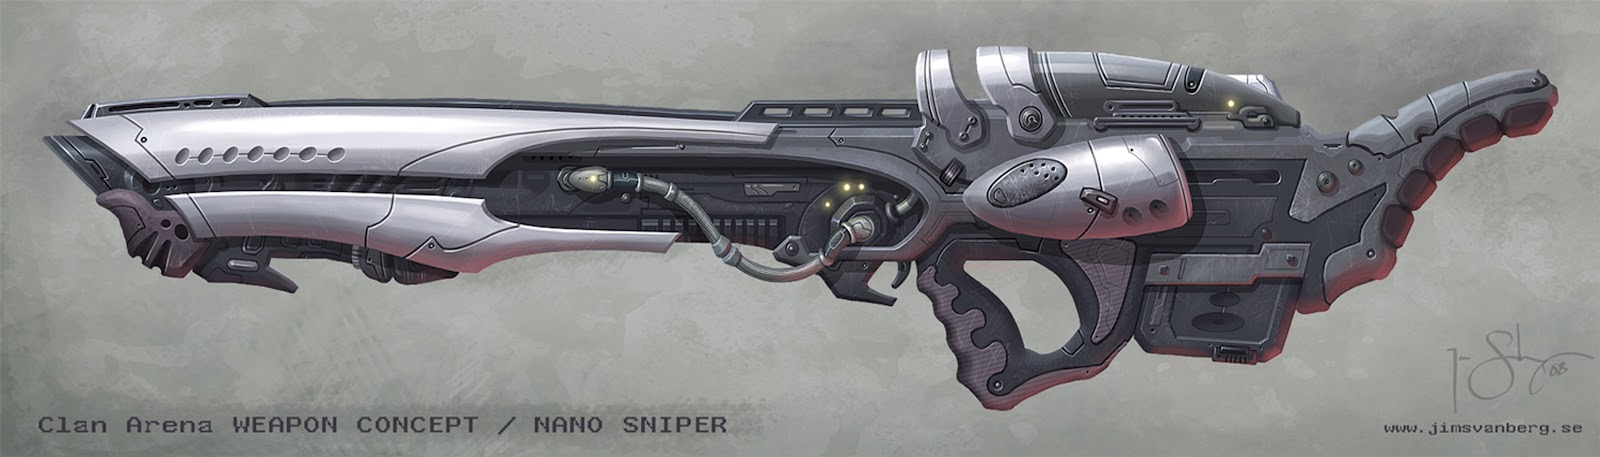 sci+fi+CA+Nano+sniper+long+range+laser+beam+cannon+rifle+blaster+futuristic+gun+weapon+by_jimsvanberg.jpg